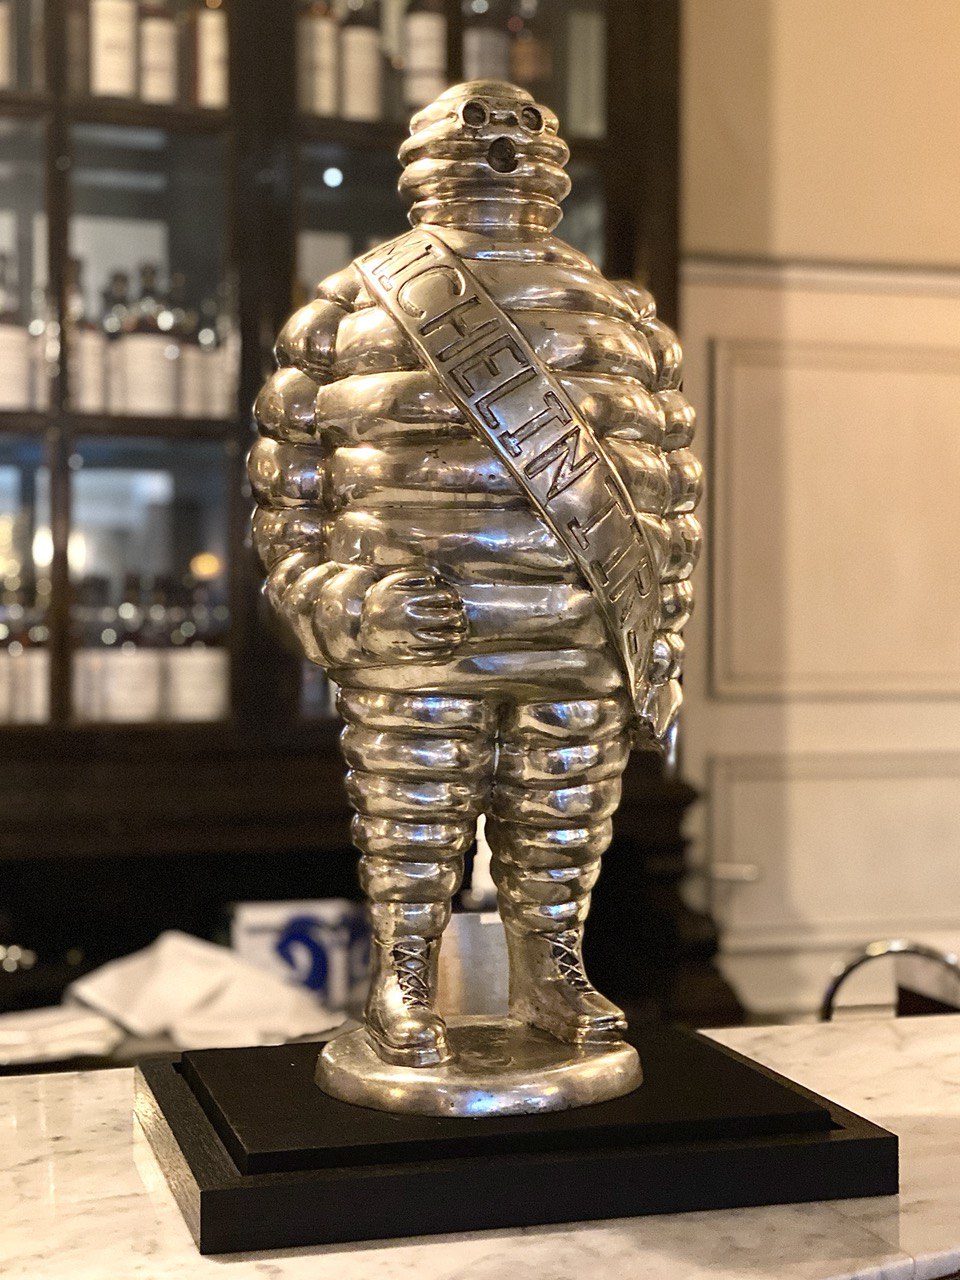 Michelin Man sculpture